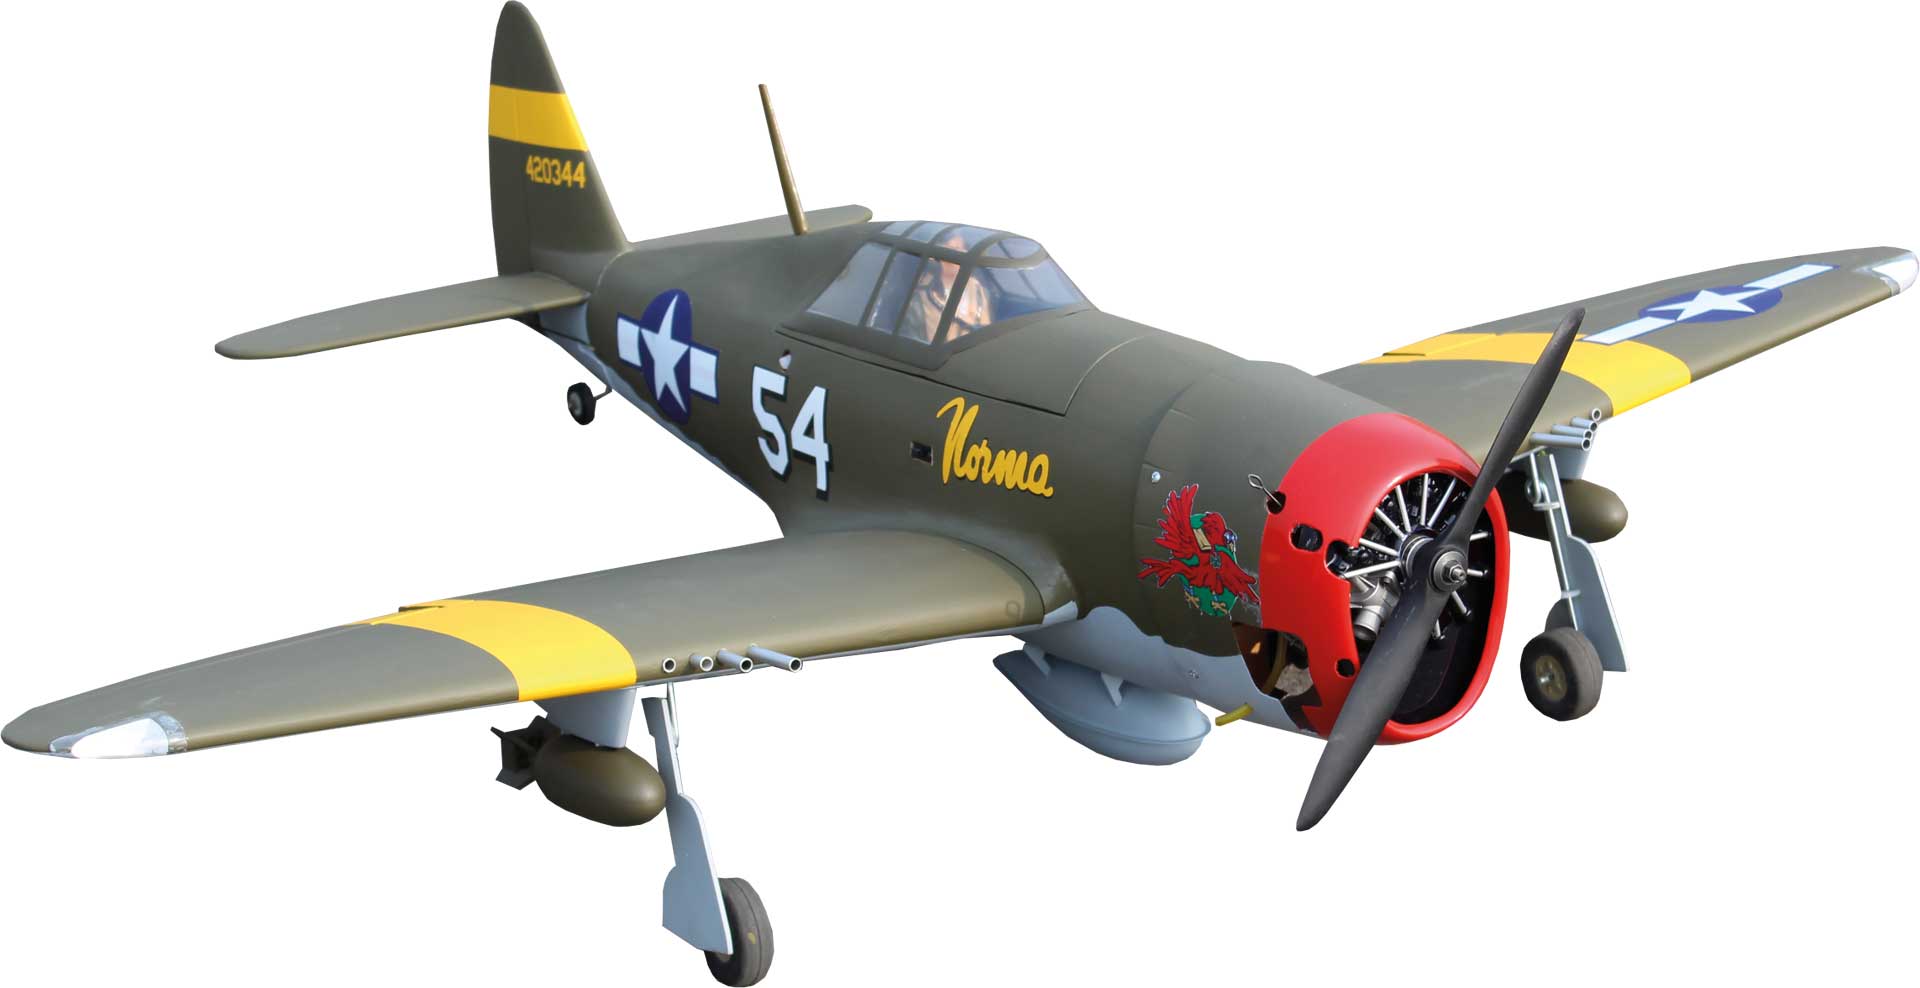 Seagull Models ( SG-Models ) P-47D "Little Bunny" MK II ARF 1,4m with NACA leading edge